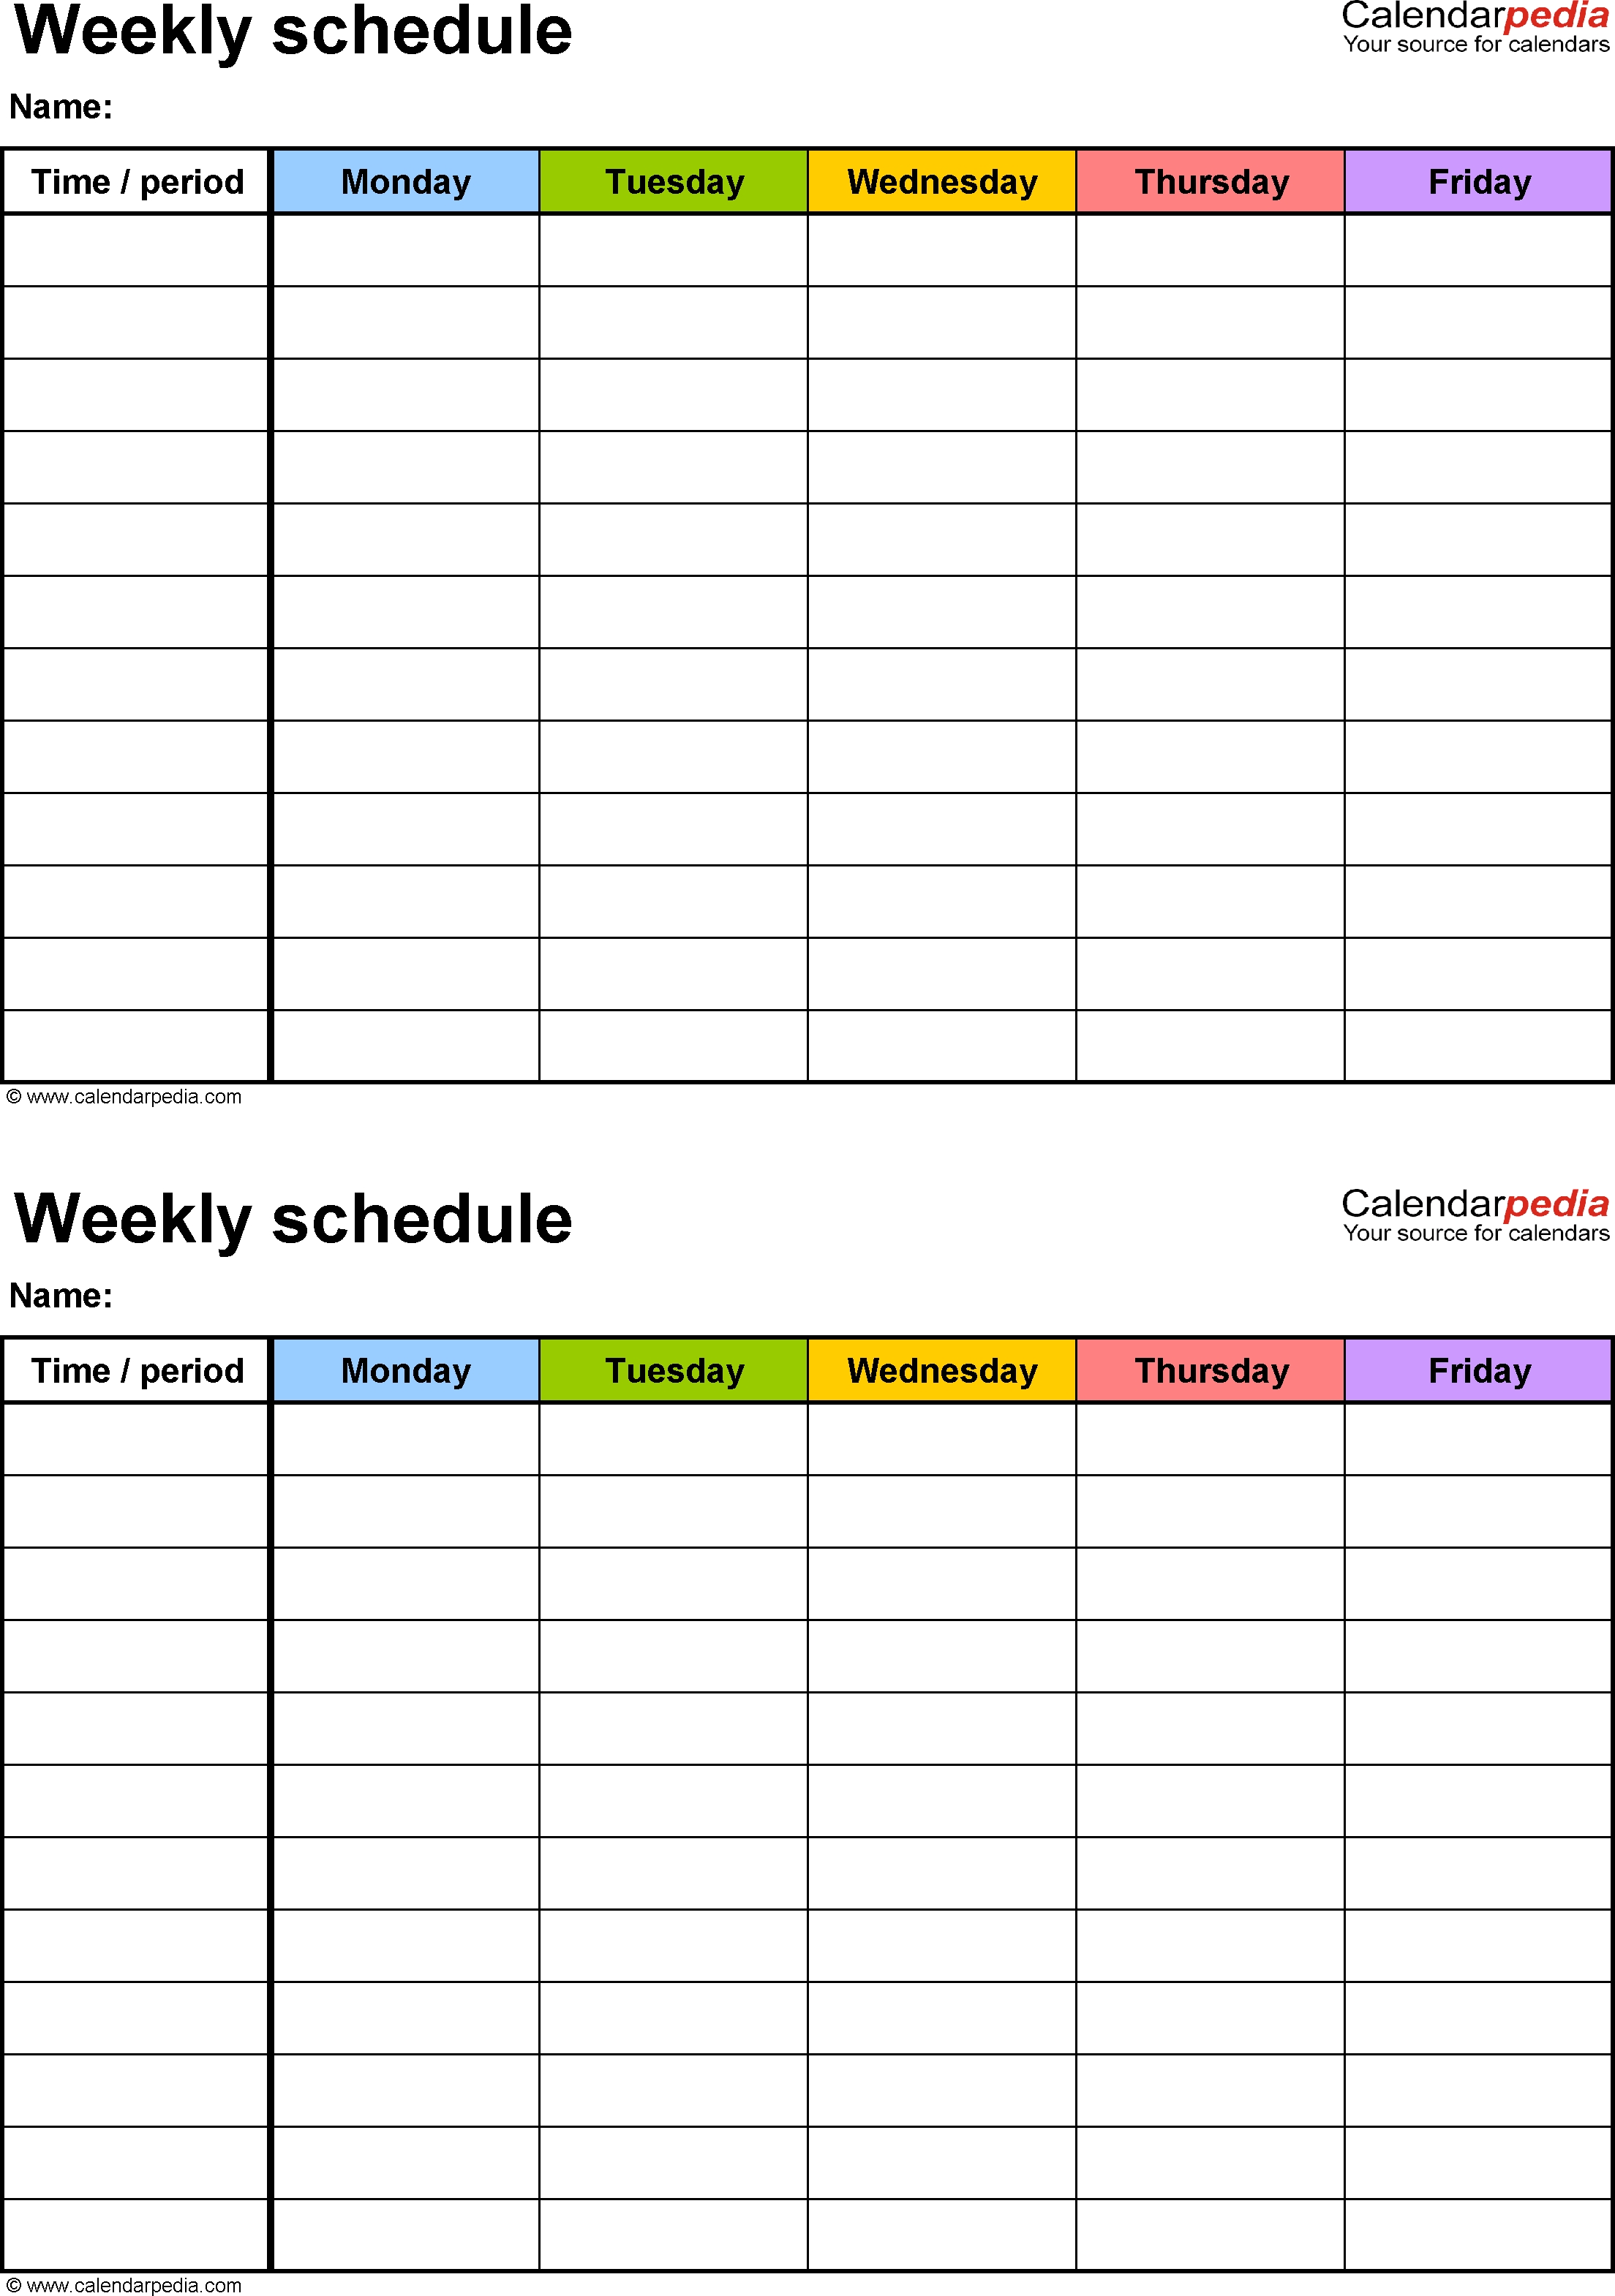 Free Weekly Schedule Templates For Word - 18 Templates Incredible Blank 7 Week Calendar